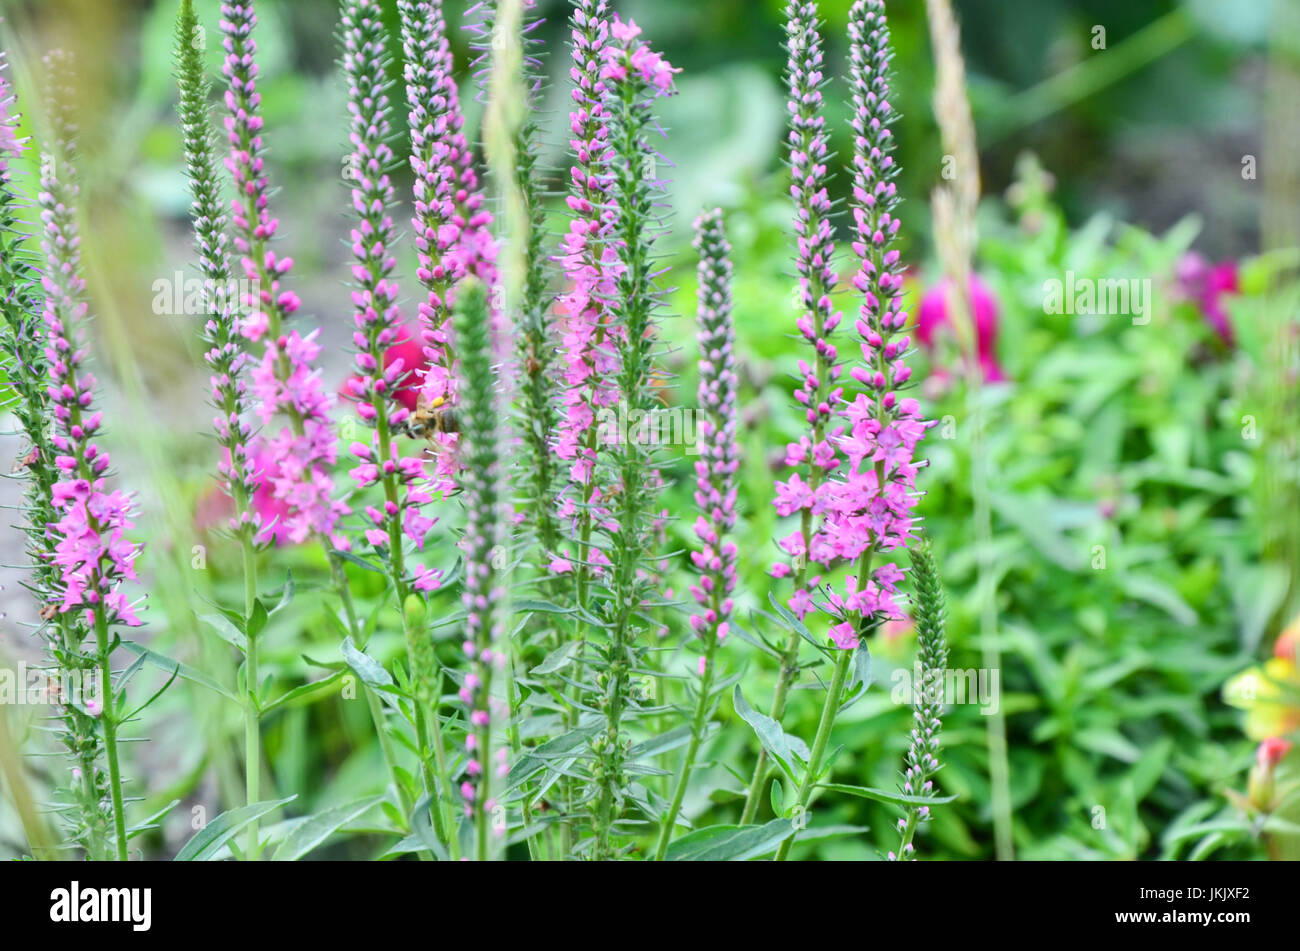 Common heather calluna vulgaris . Small honey forest plant and ornamental garden plant. Stock Photo